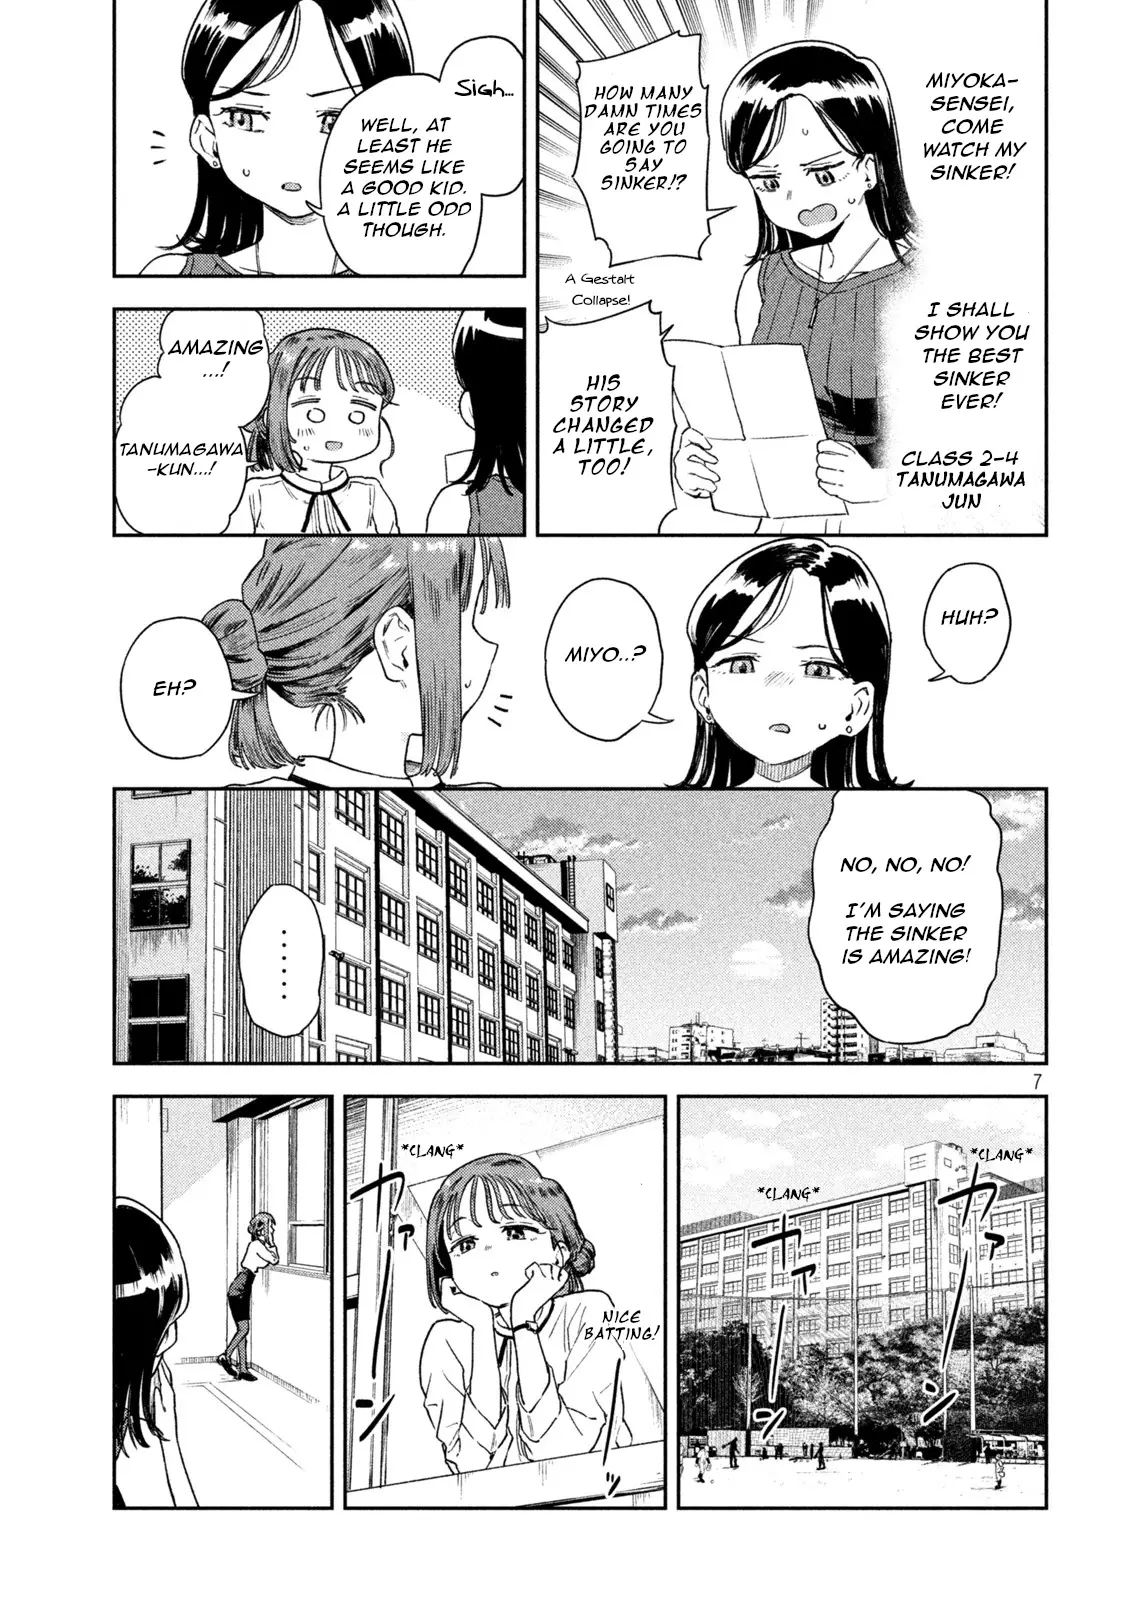 Miyo-Chan Sensei Said So - 5 page 7-5dad6022